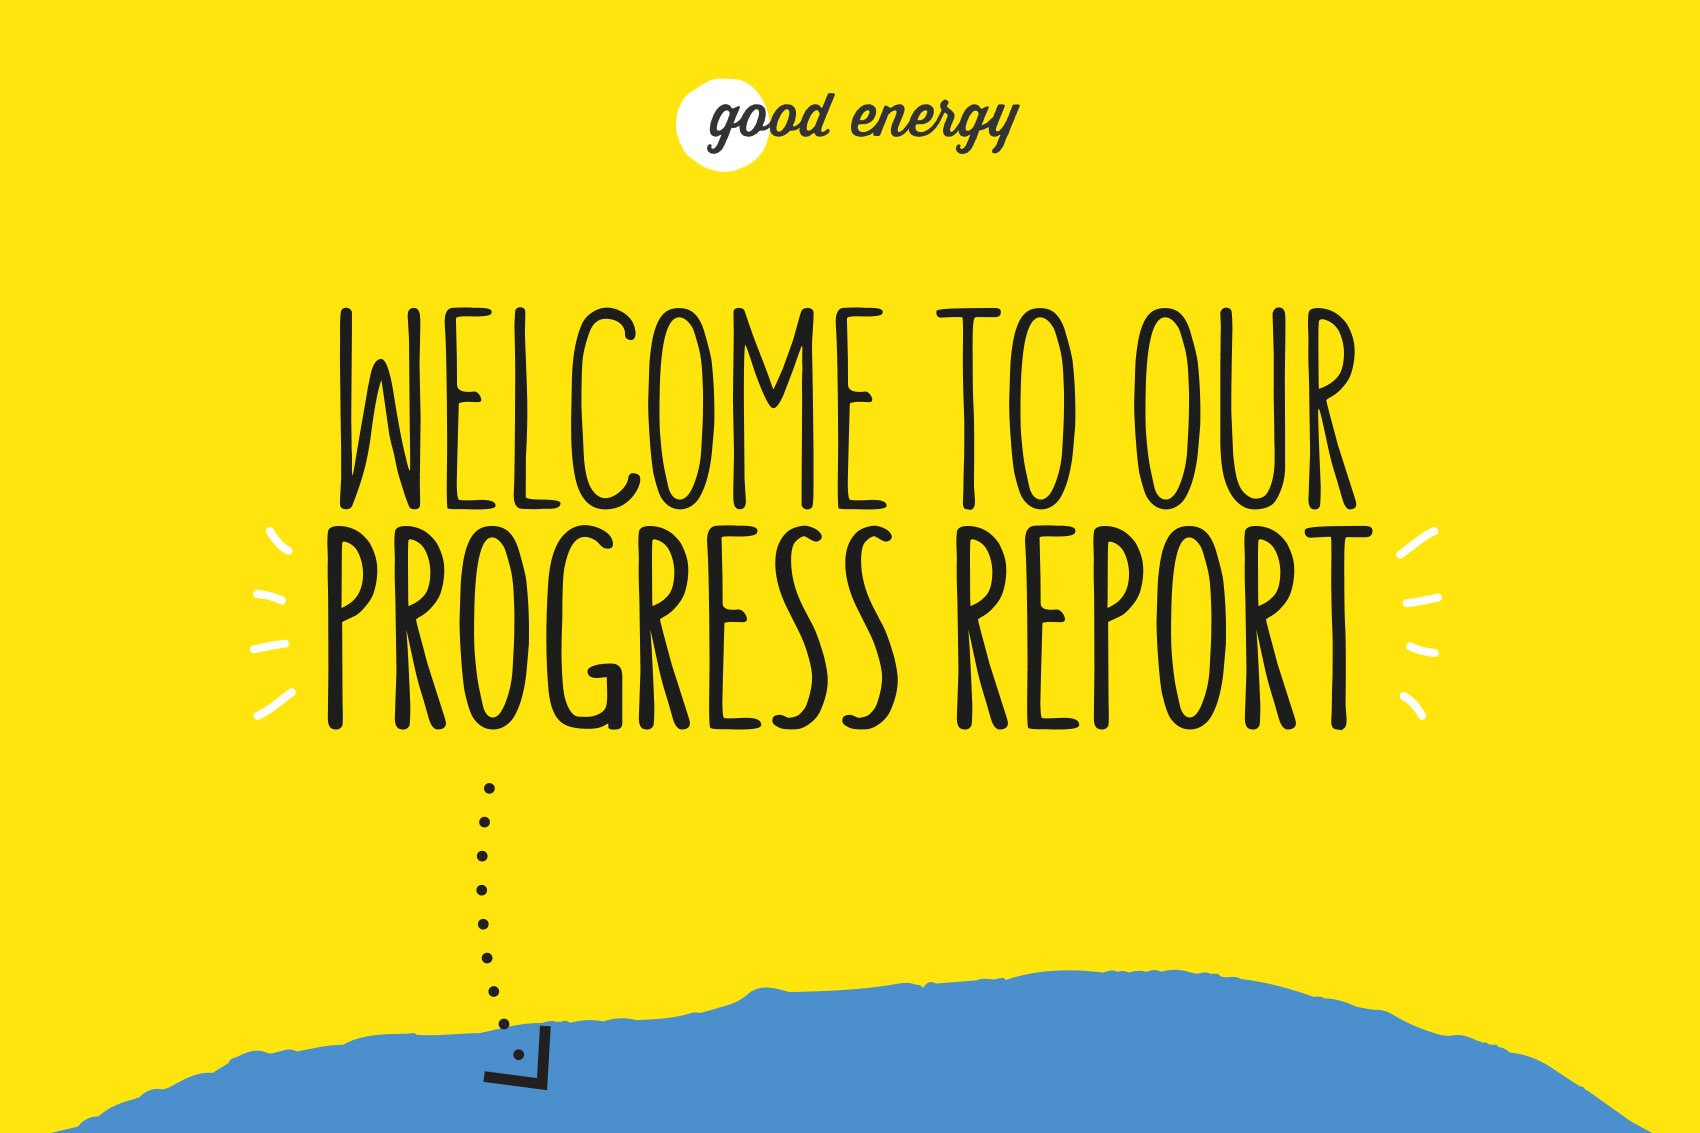 Good Energy Progress Report